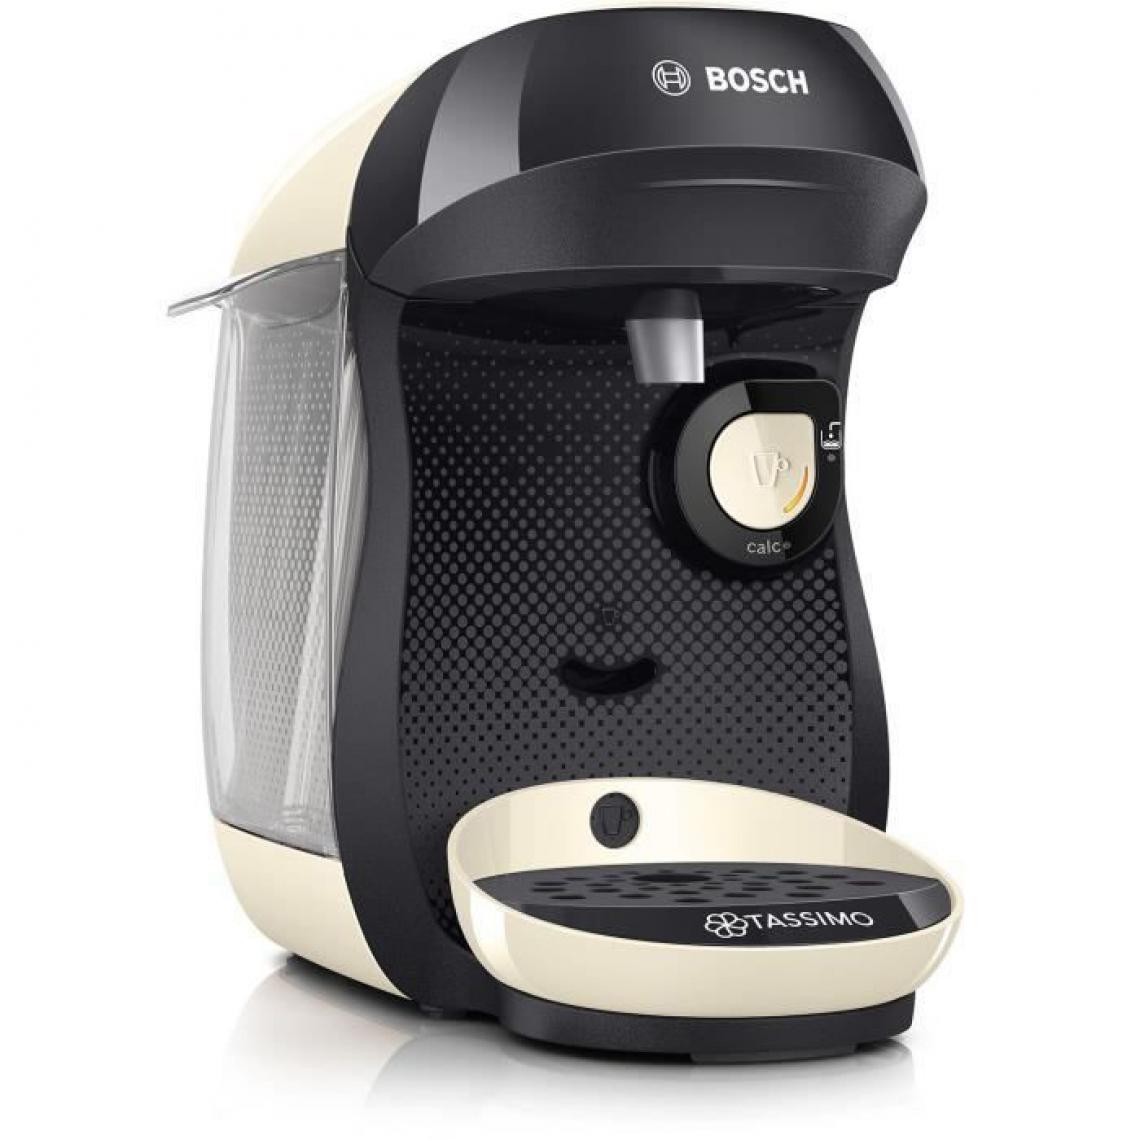 Bosch - BOSCH - TASSIMO - T10 HAPPY - Machine a café multi-boissons vanille - Expresso - Cafetière